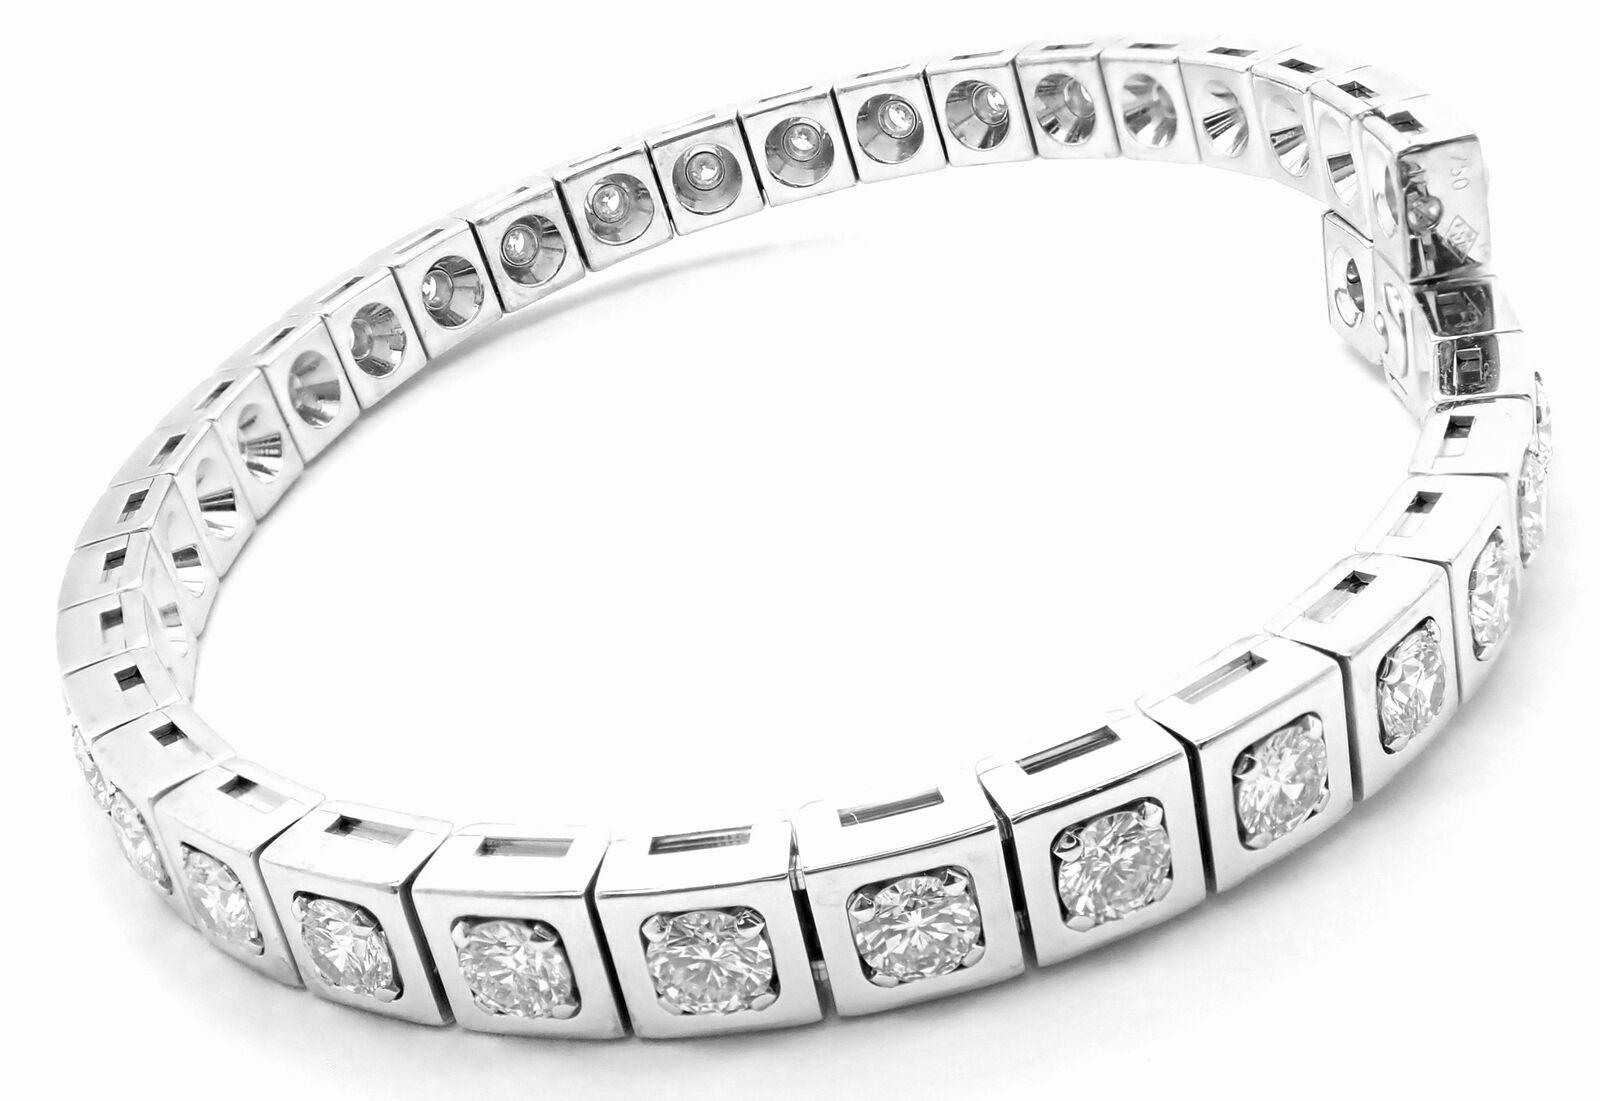 18k White Gold Diamond Tectonique Tennis Bangle Bracelet by Cartier. 
With 36 Round Brilliant Cut Diamonds VVS1clarity, E color total weight approximately 5.76ct
Details: 
Length: 7